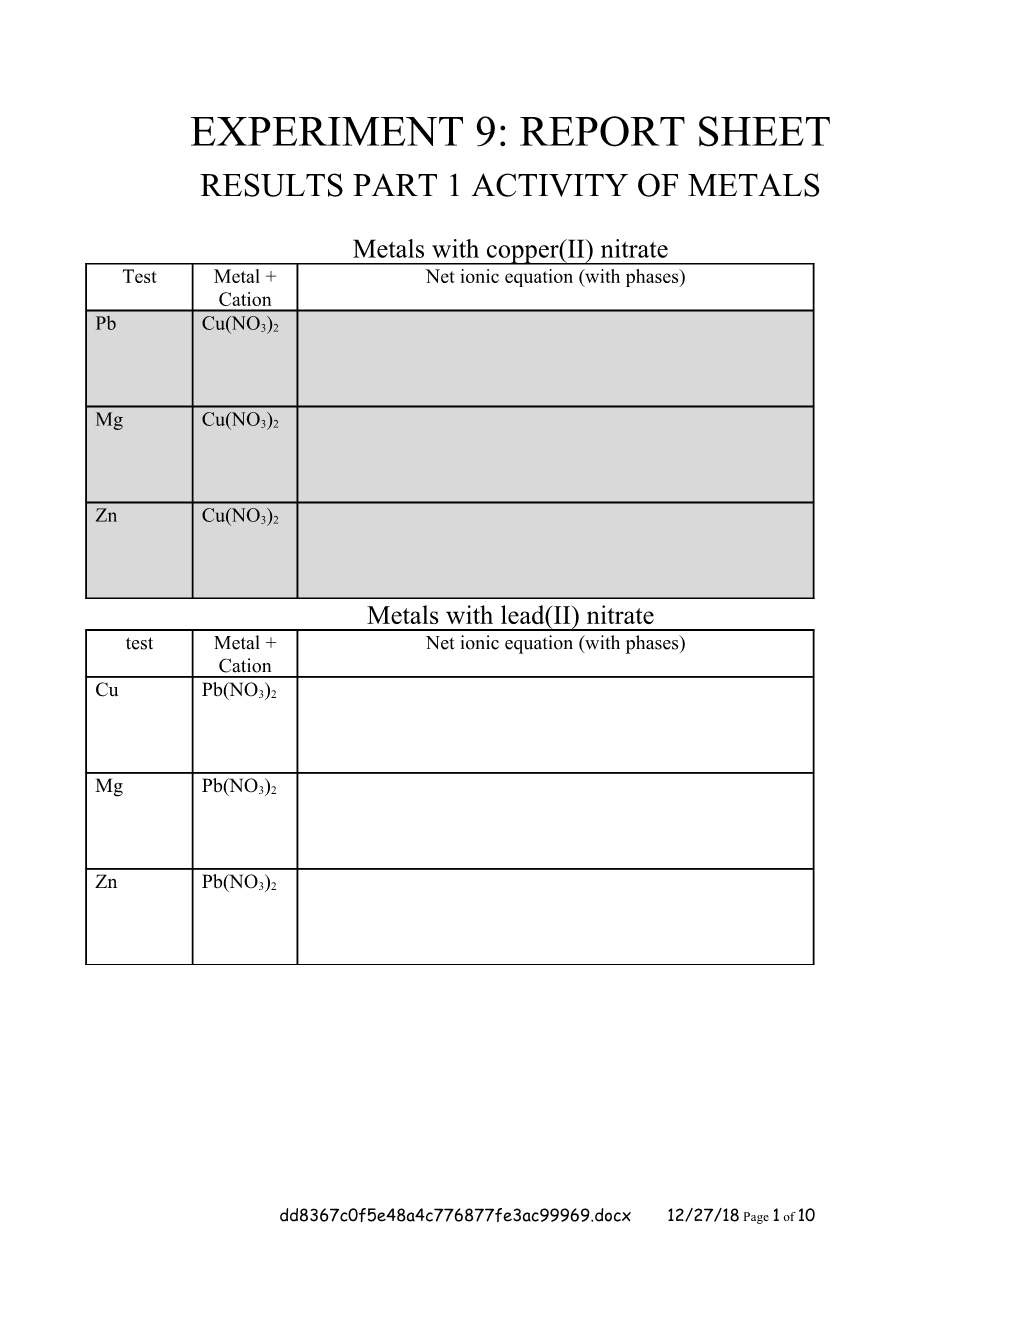 Results Part 1 Activity of Metals